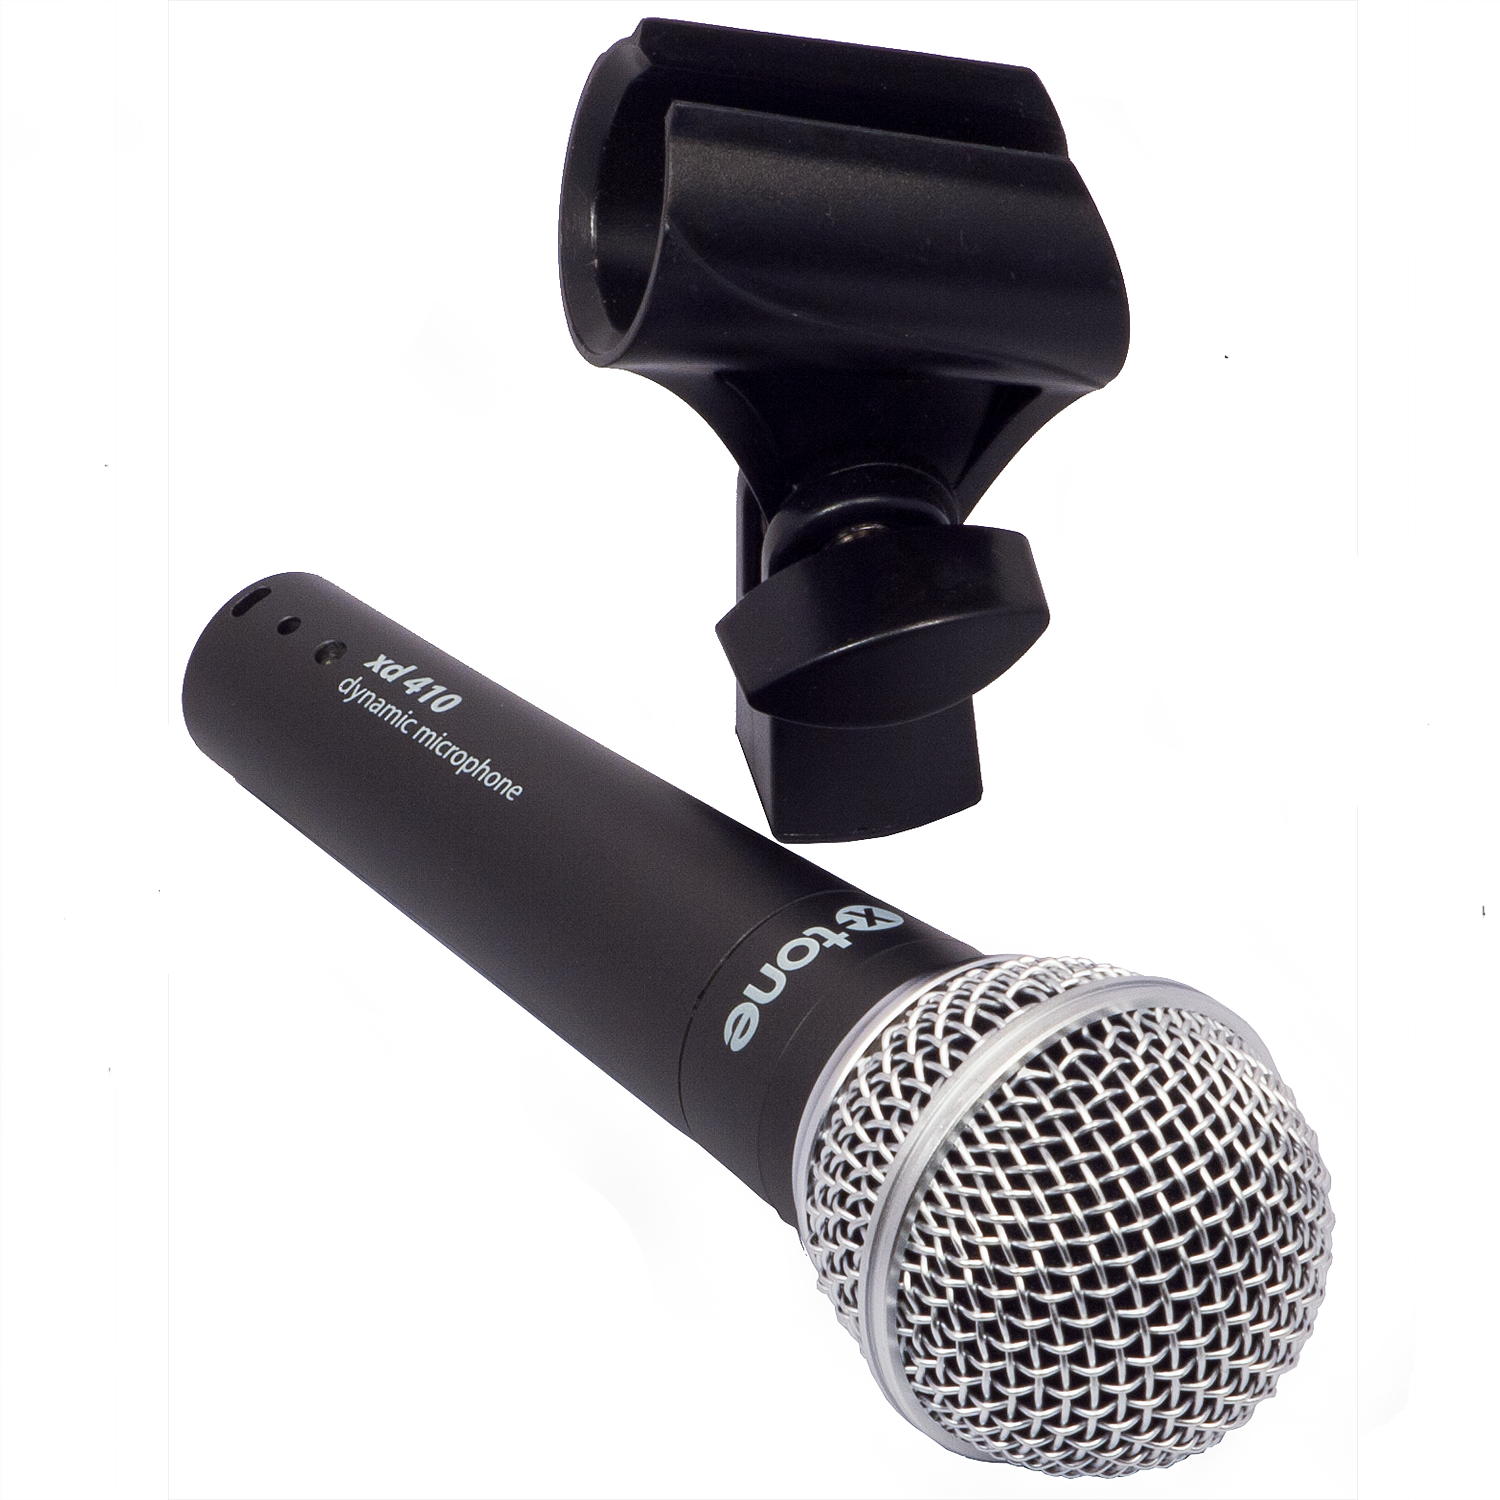 X-tone Xd-410 - Vocal microphones - Variation 1